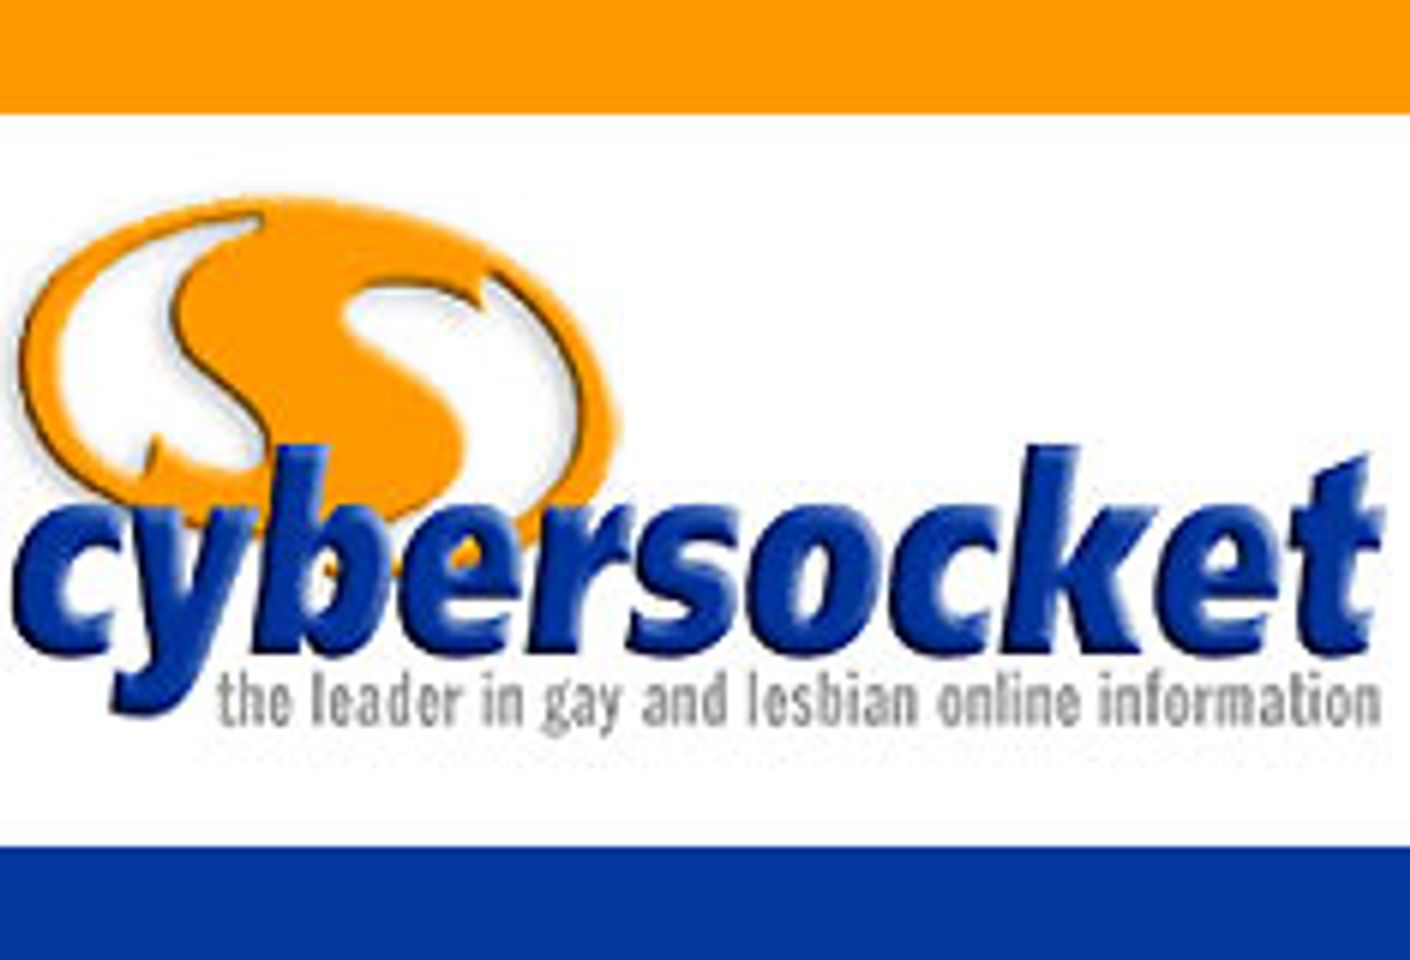 Cybersocket Unity Ball Raises $5,000 for Charity